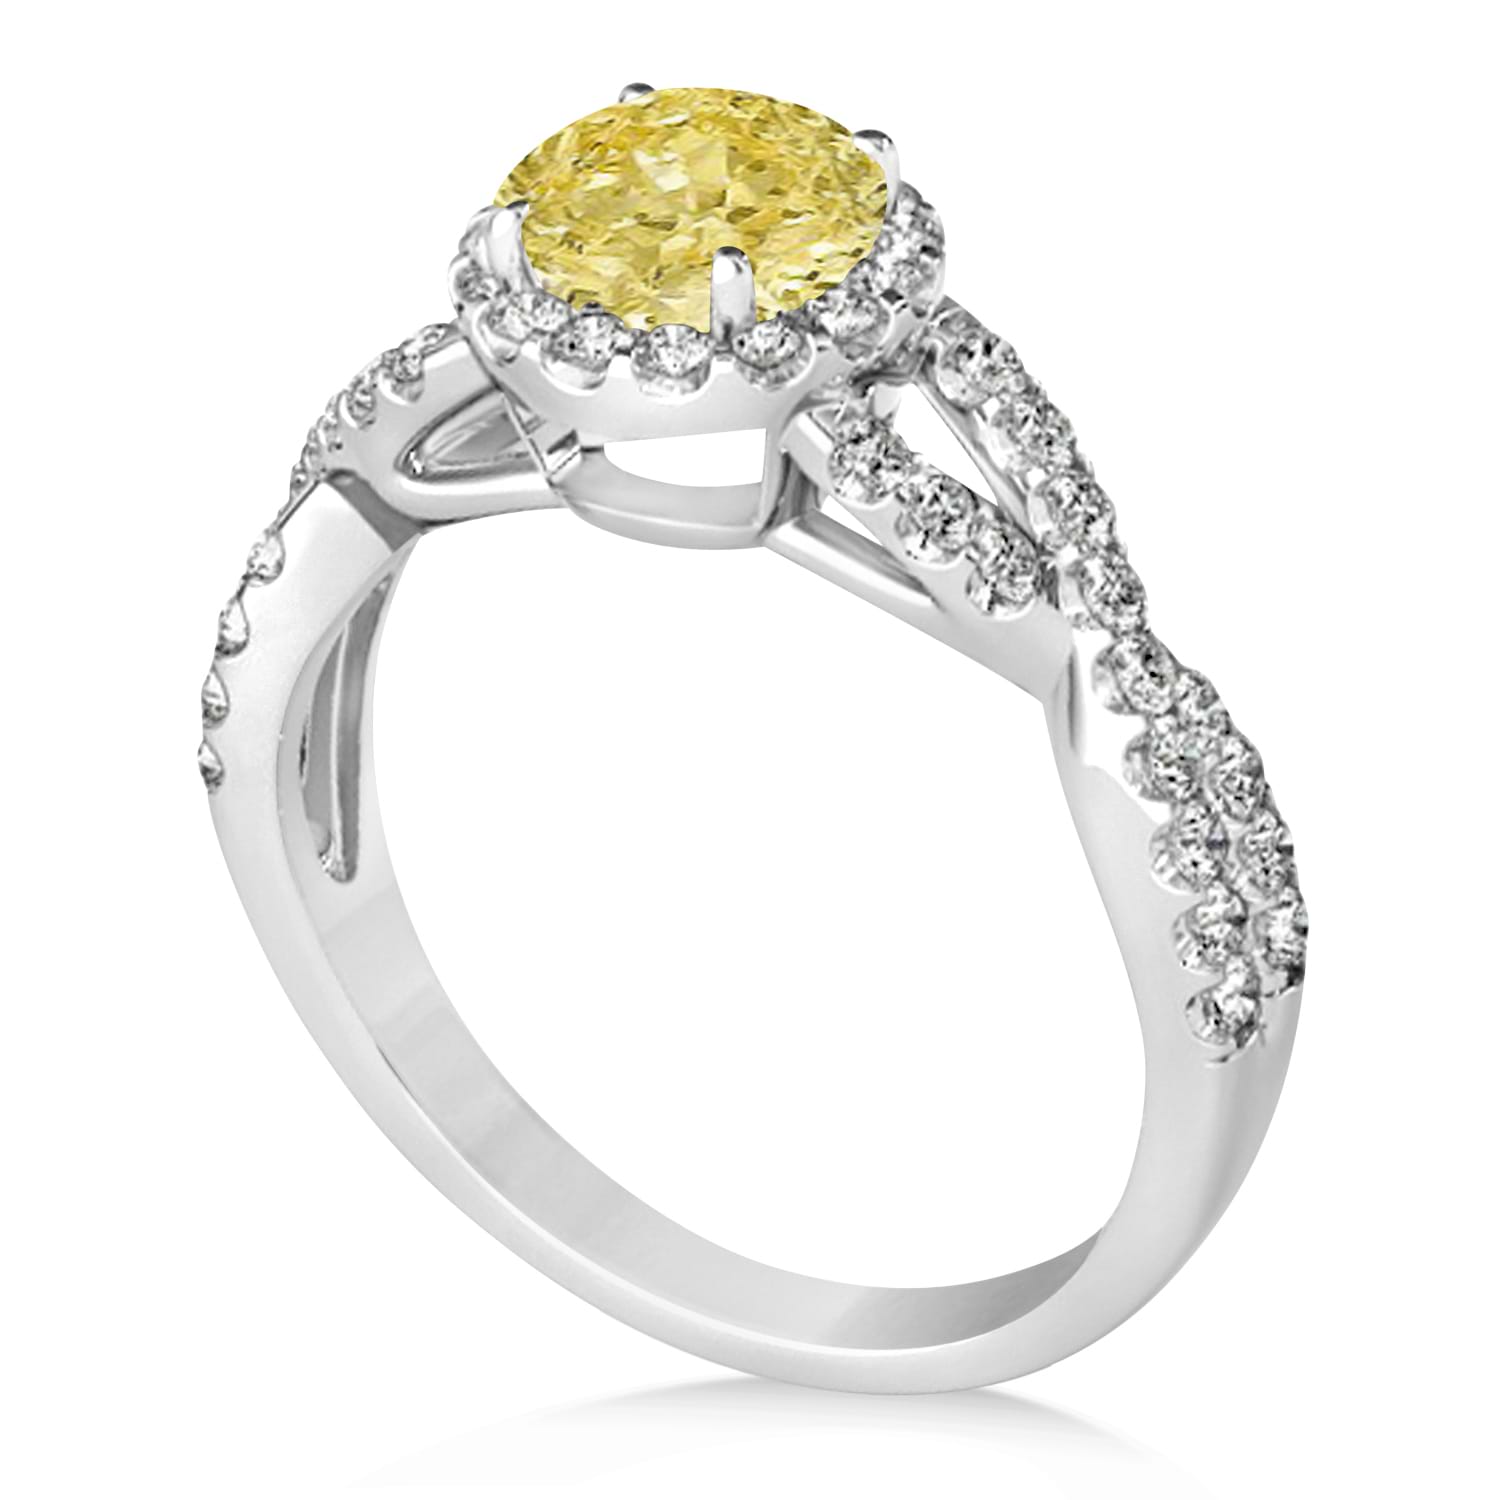 Yellow Diamond & Diamond Twisted Engagement Ring 18k White Gold 1.30ct